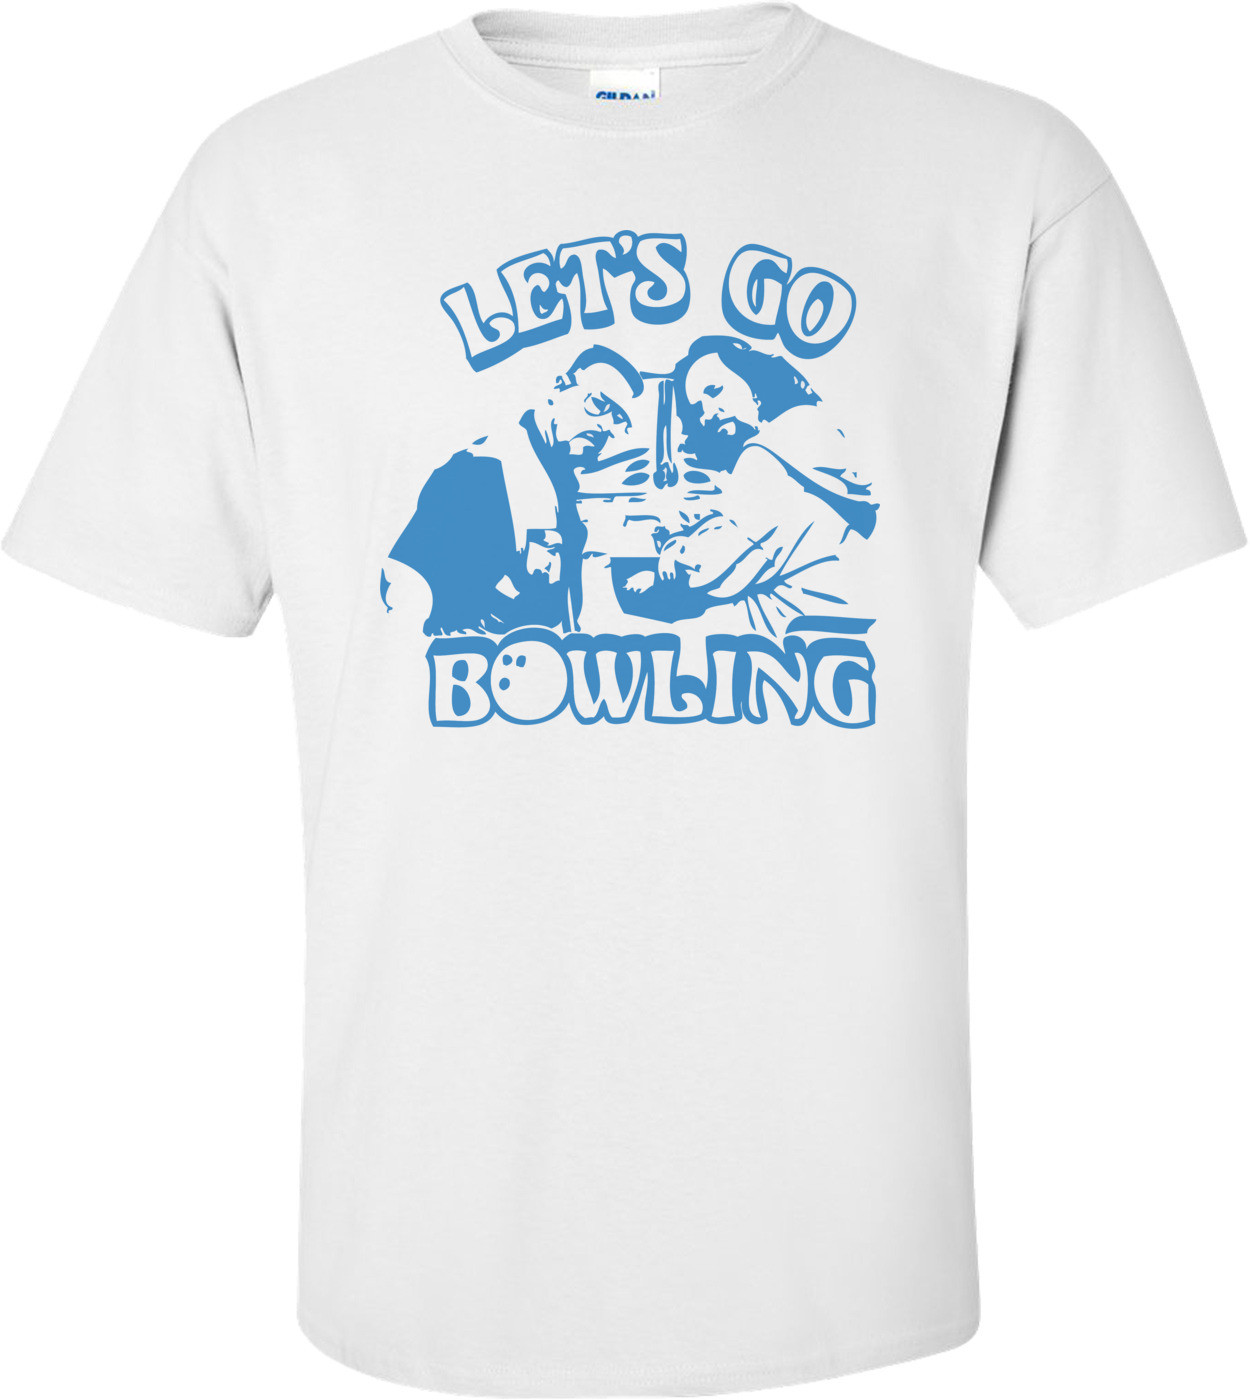 Let's Go Bowling The Big Lebowski T-shirt